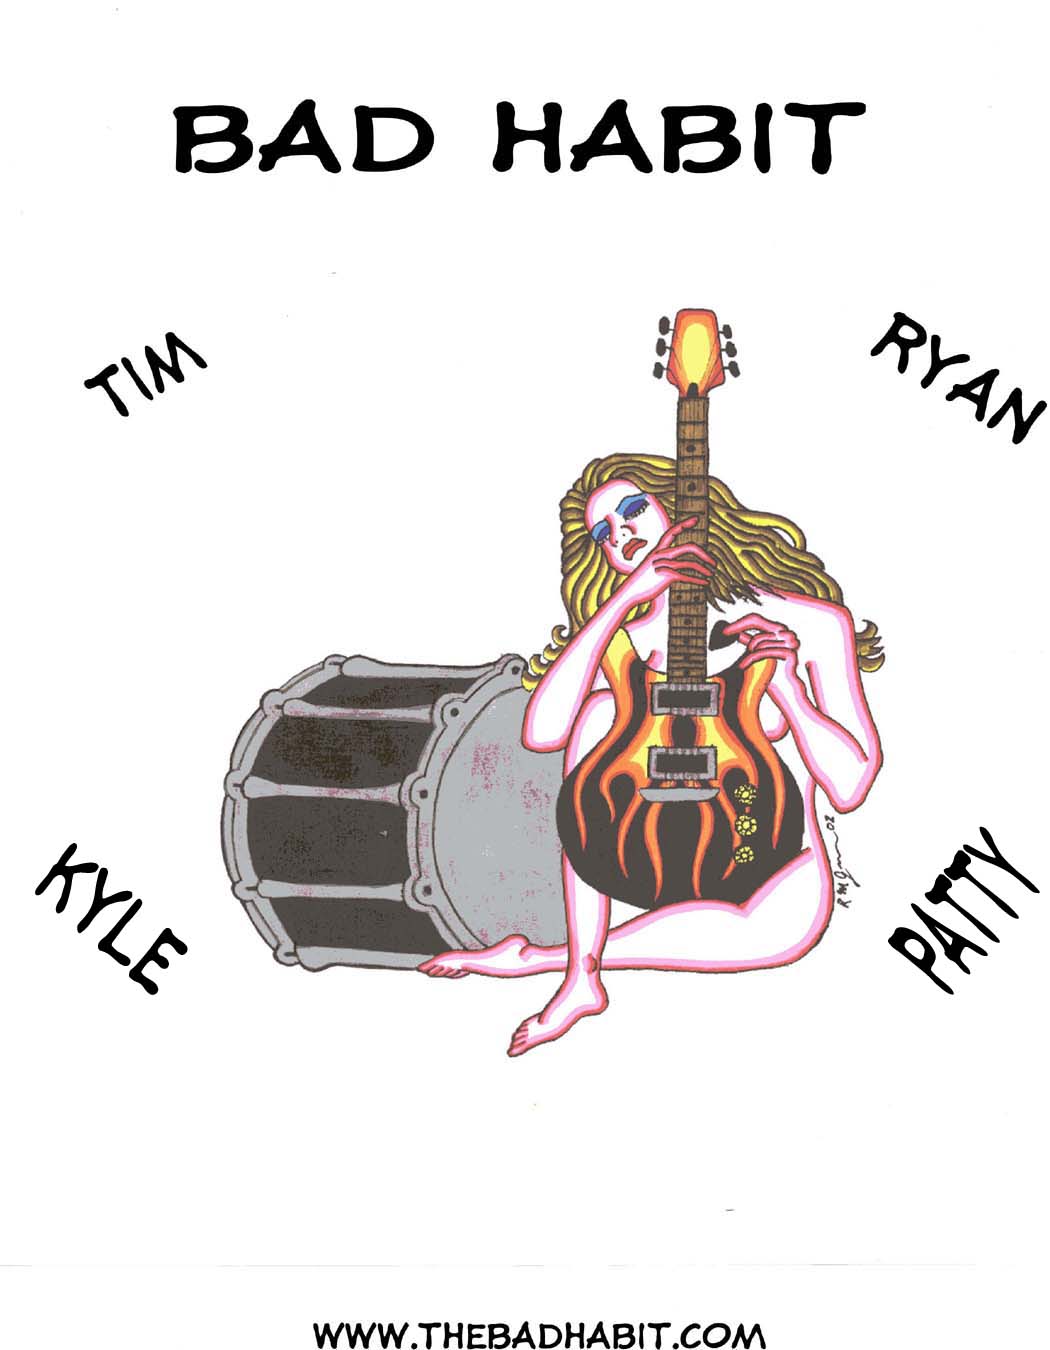 Bad Habit's logo